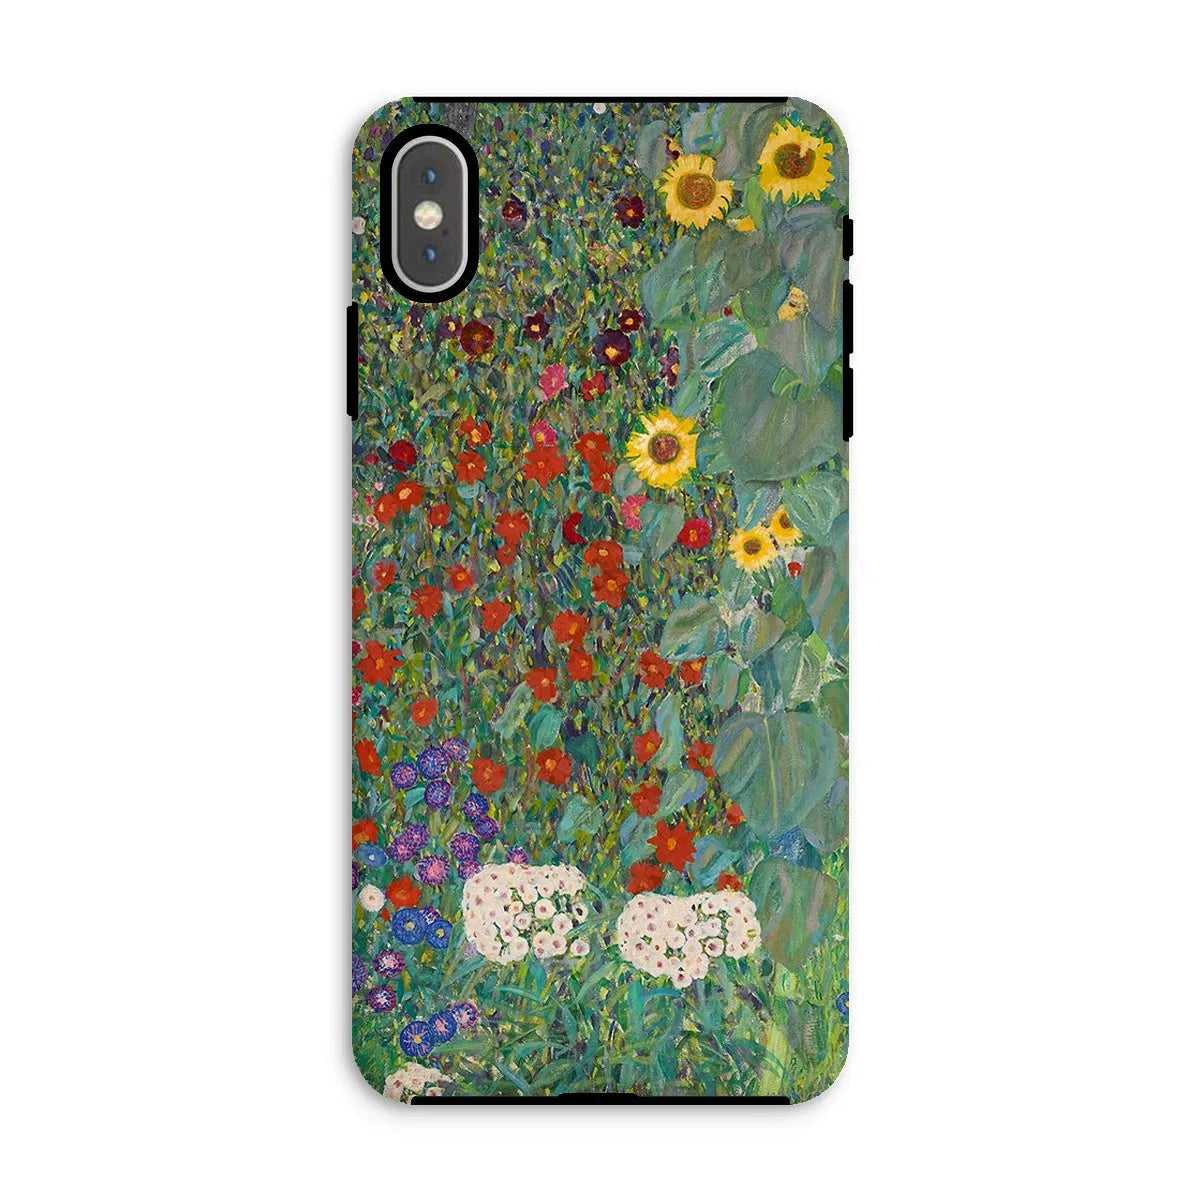 Farm Garden With Sunflowers Art Phone Case - Gustav Klimt - Iphone Xs Max / Matte - Mobile Phone Cases - Aesthetic Art